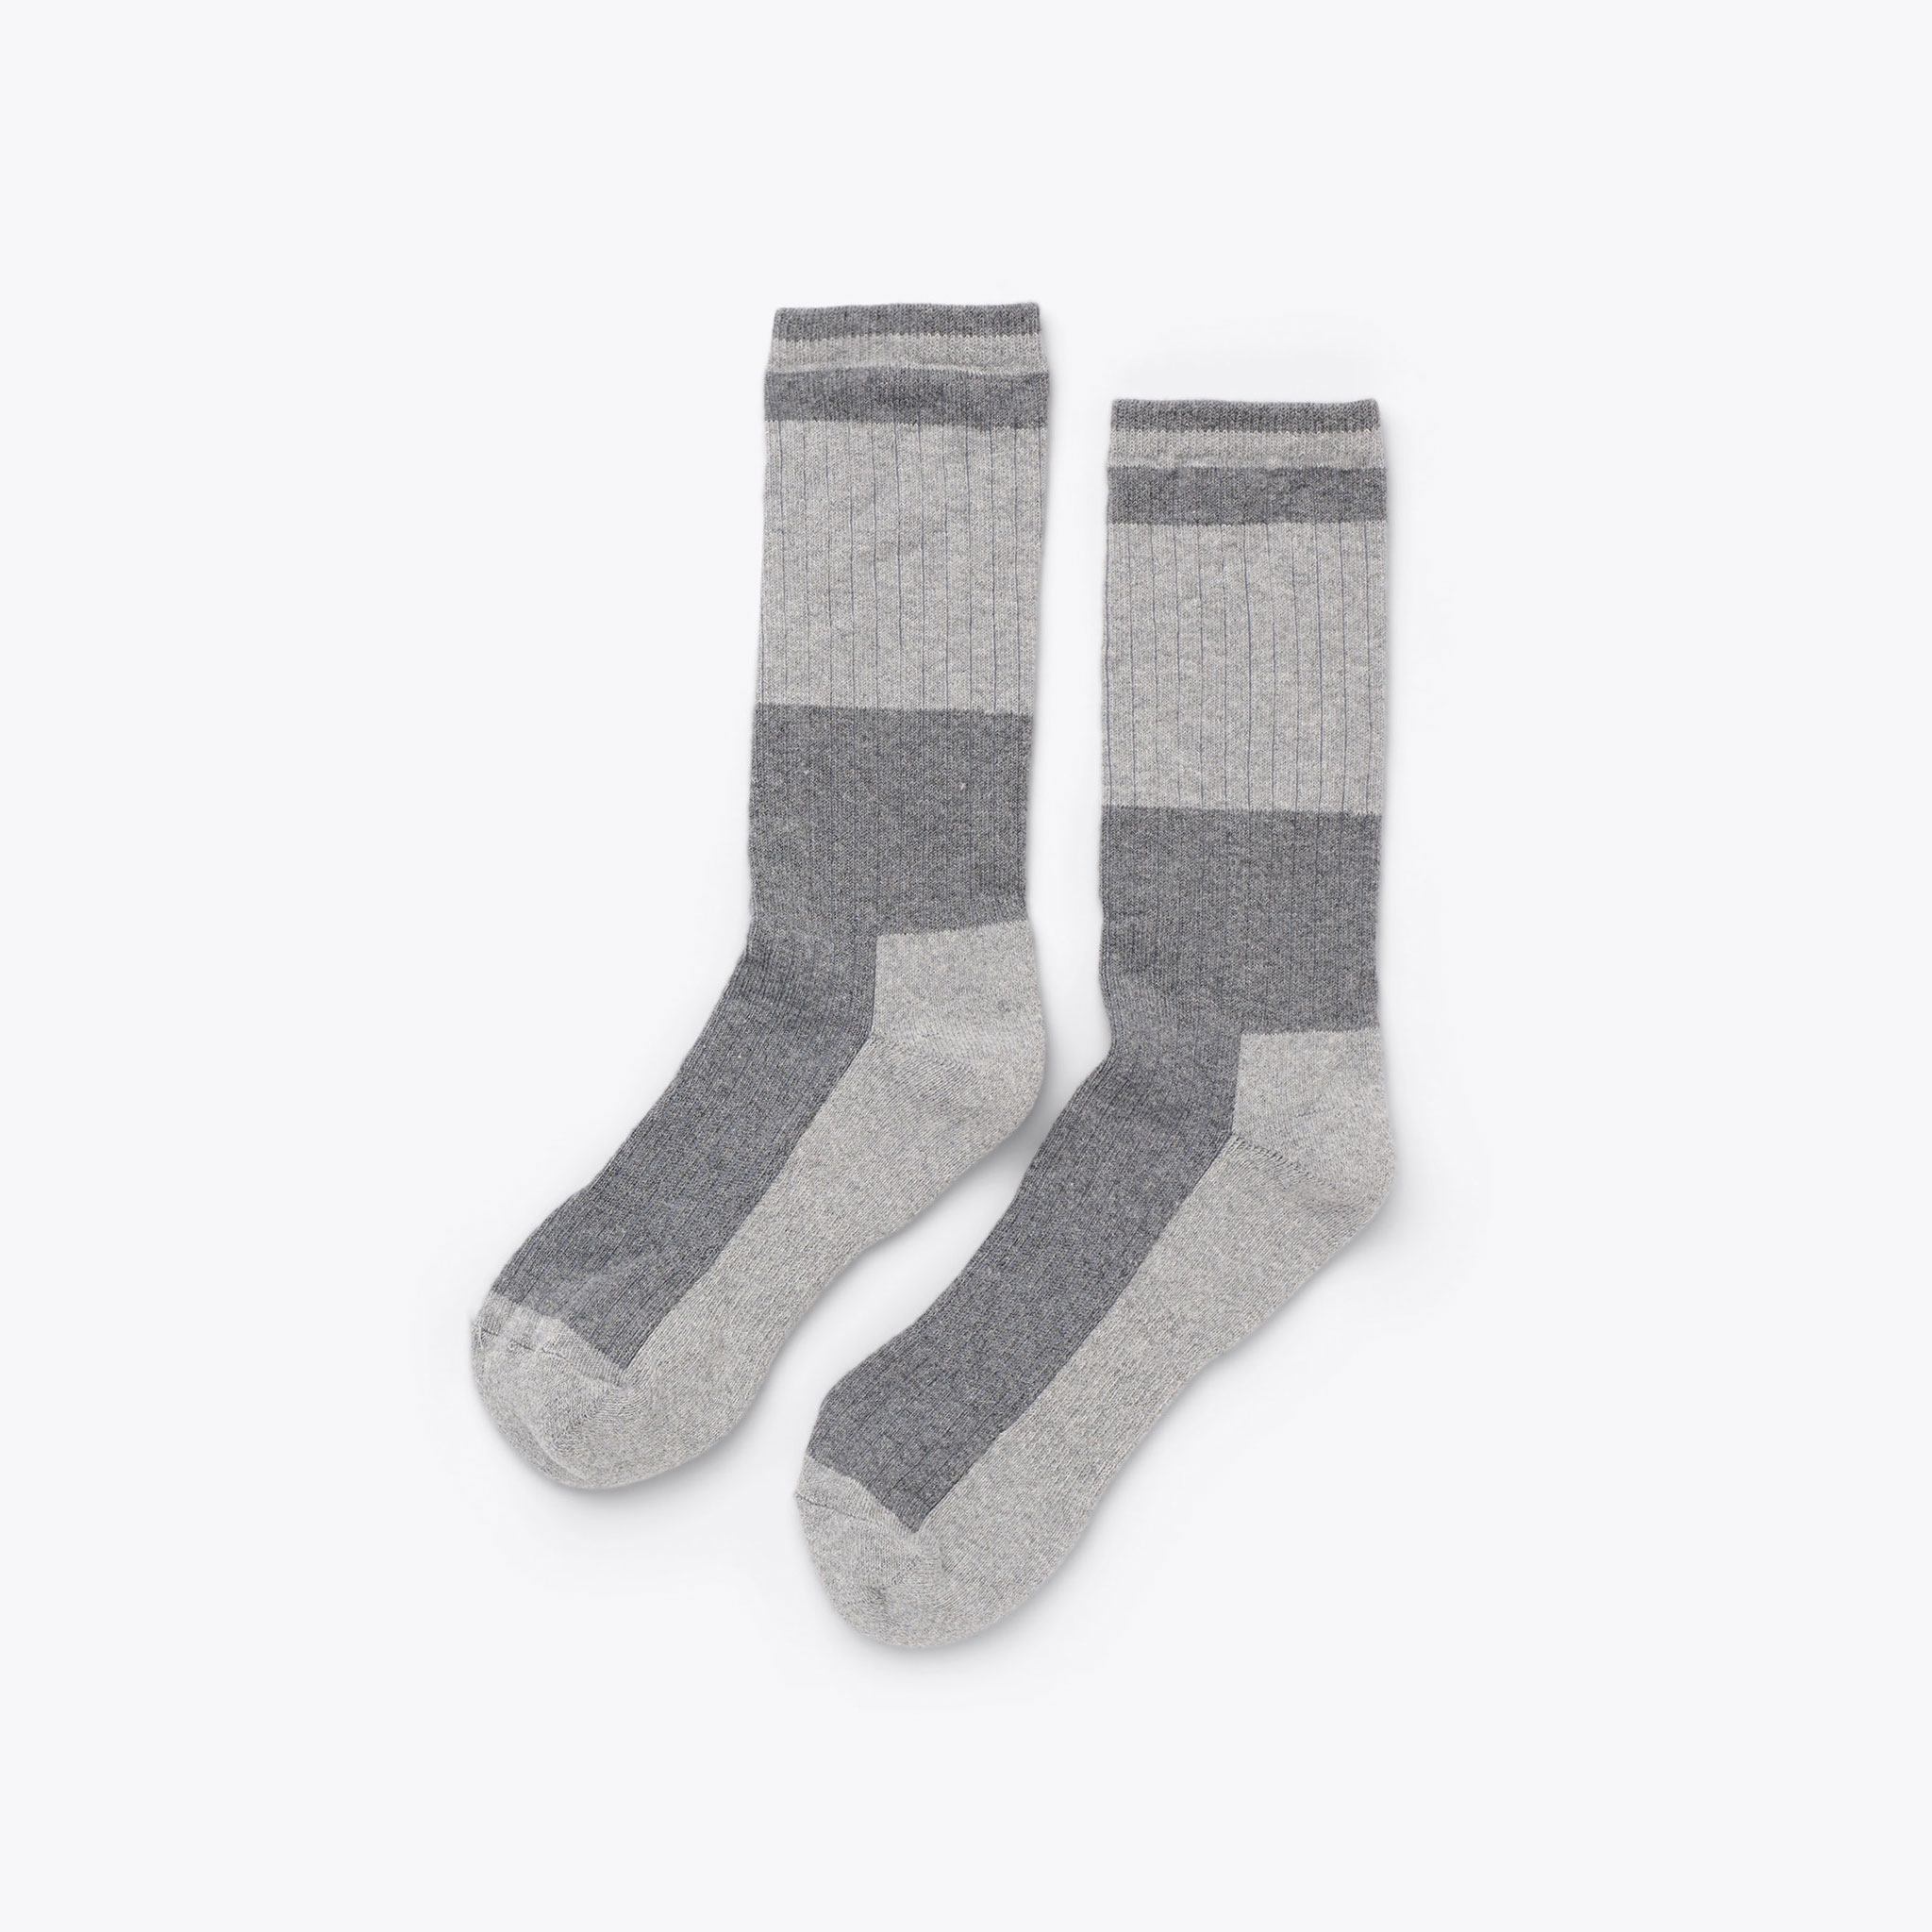 Product Image 2 of the Cotton Crew Sock Charcoal/Grey Socks Nisolo 